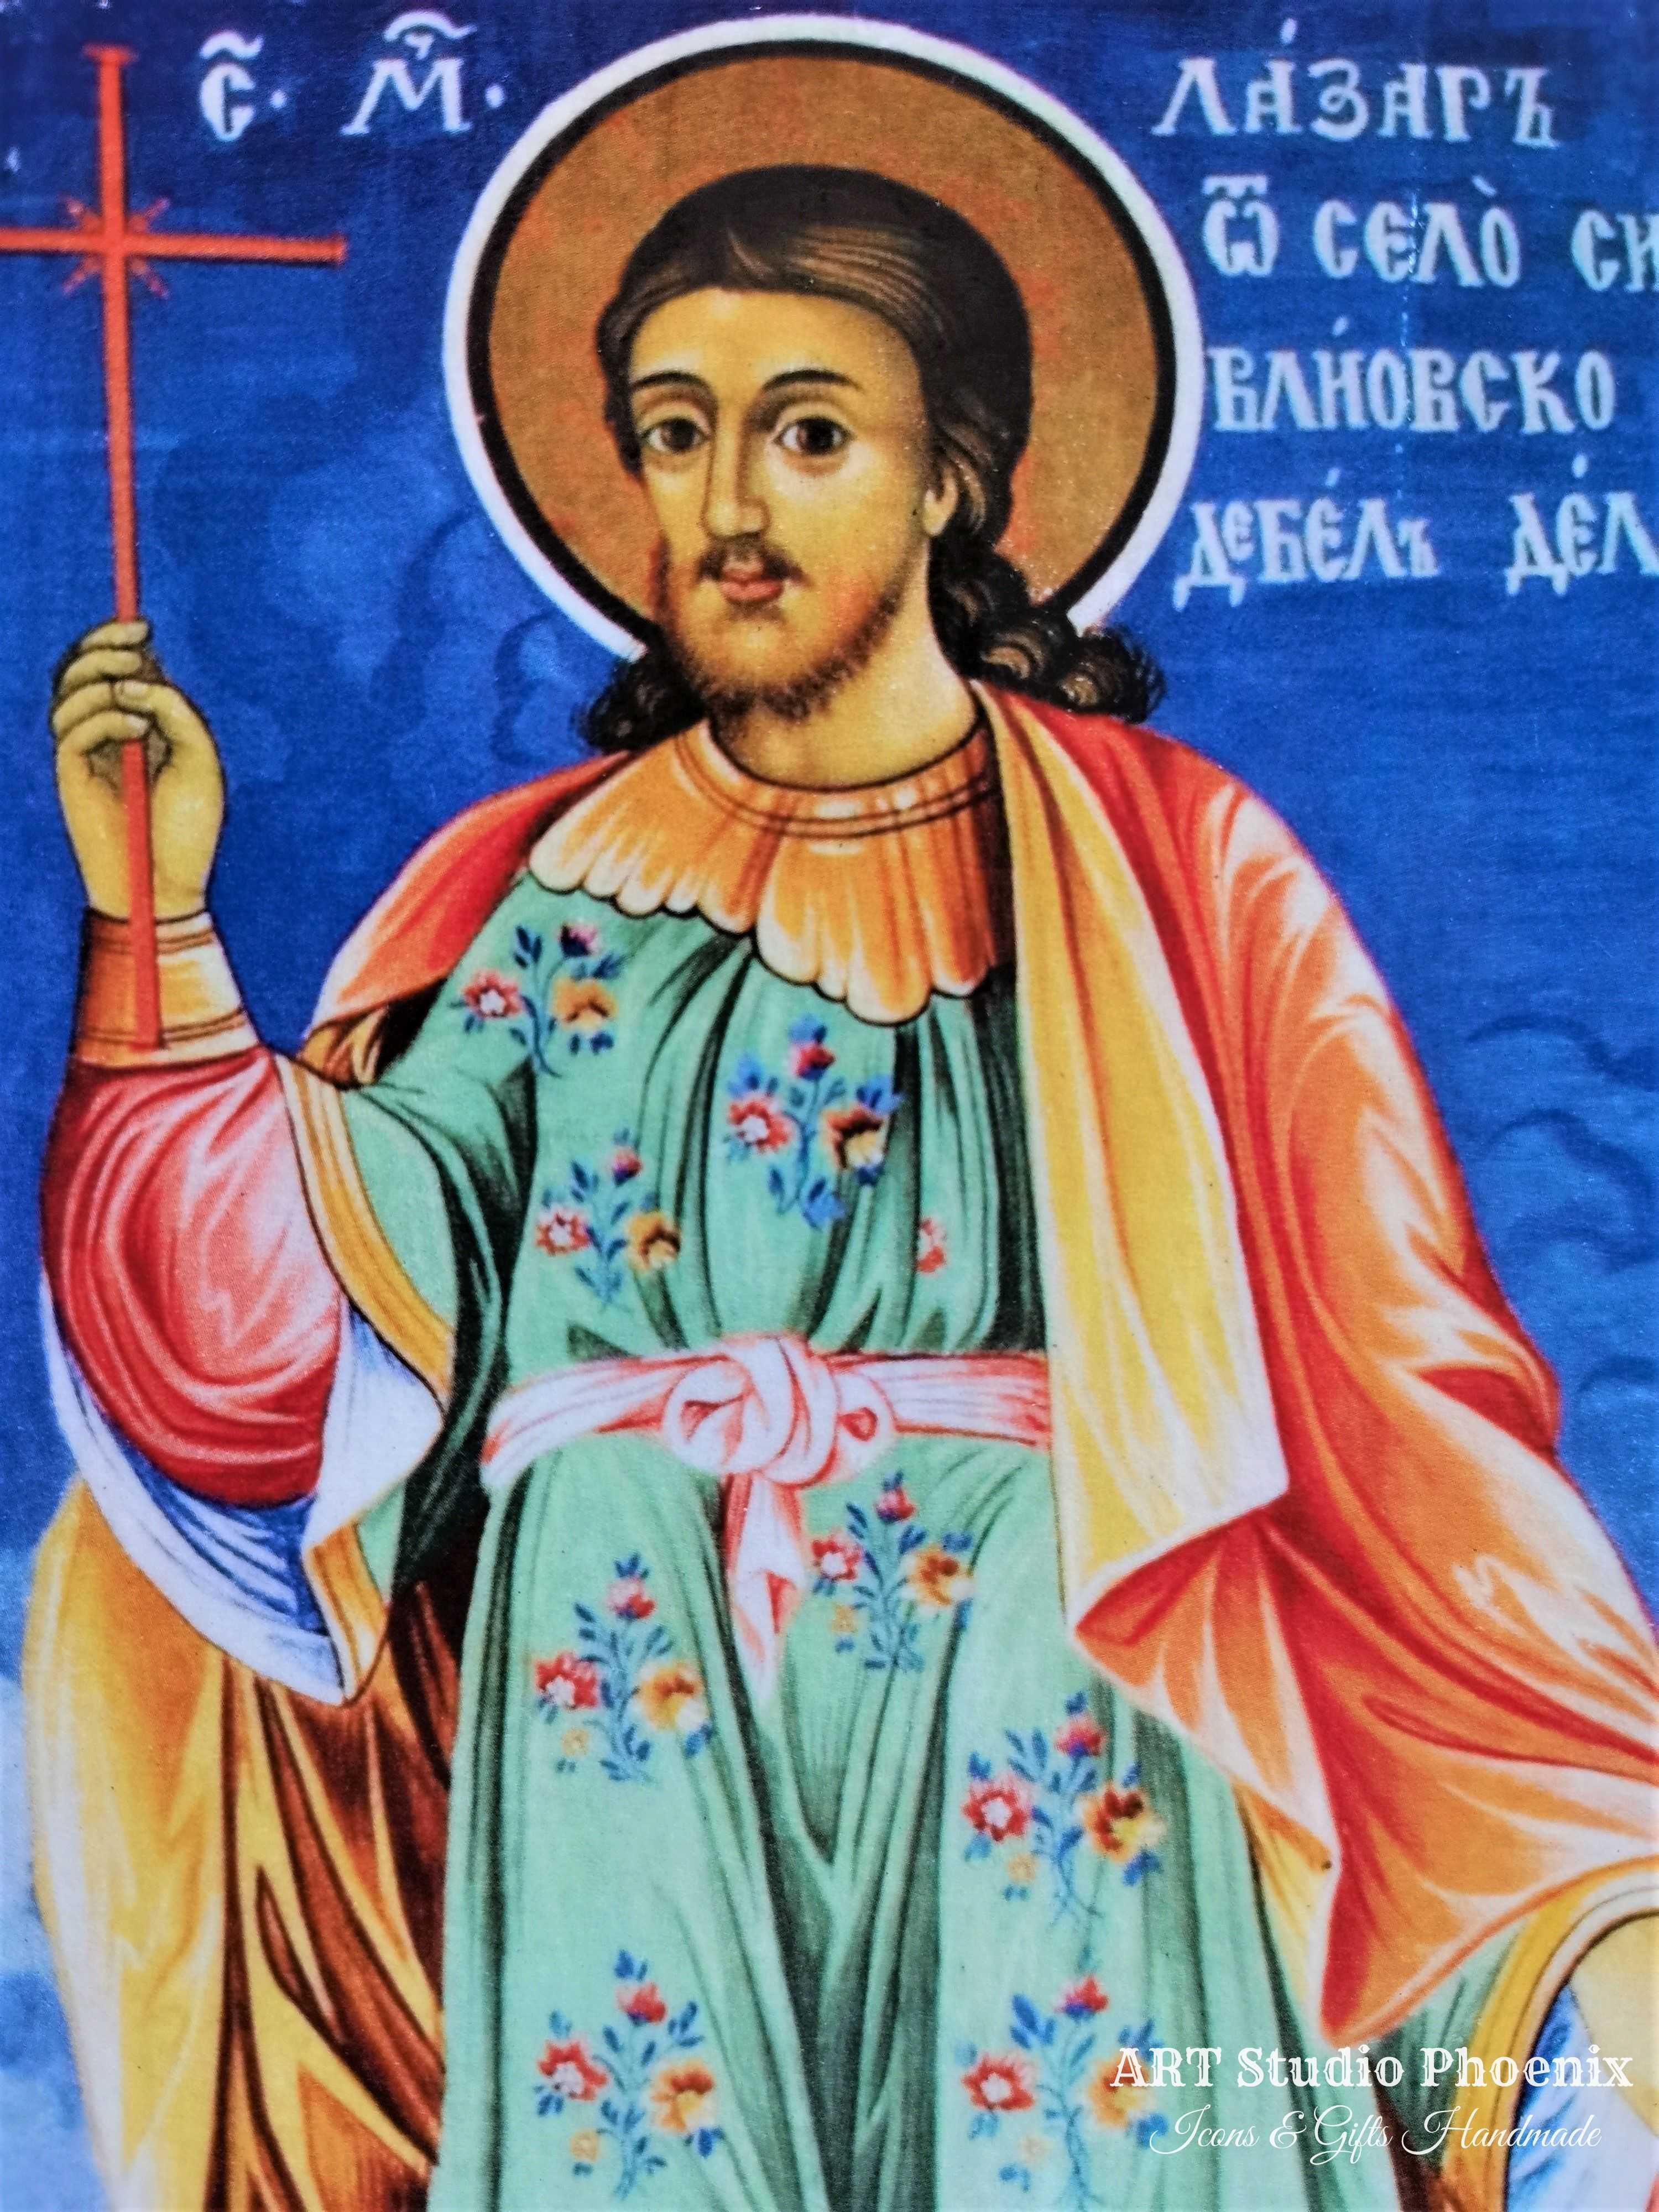 Икона на Свети Лазар Български ikona sveti lazar balgarski